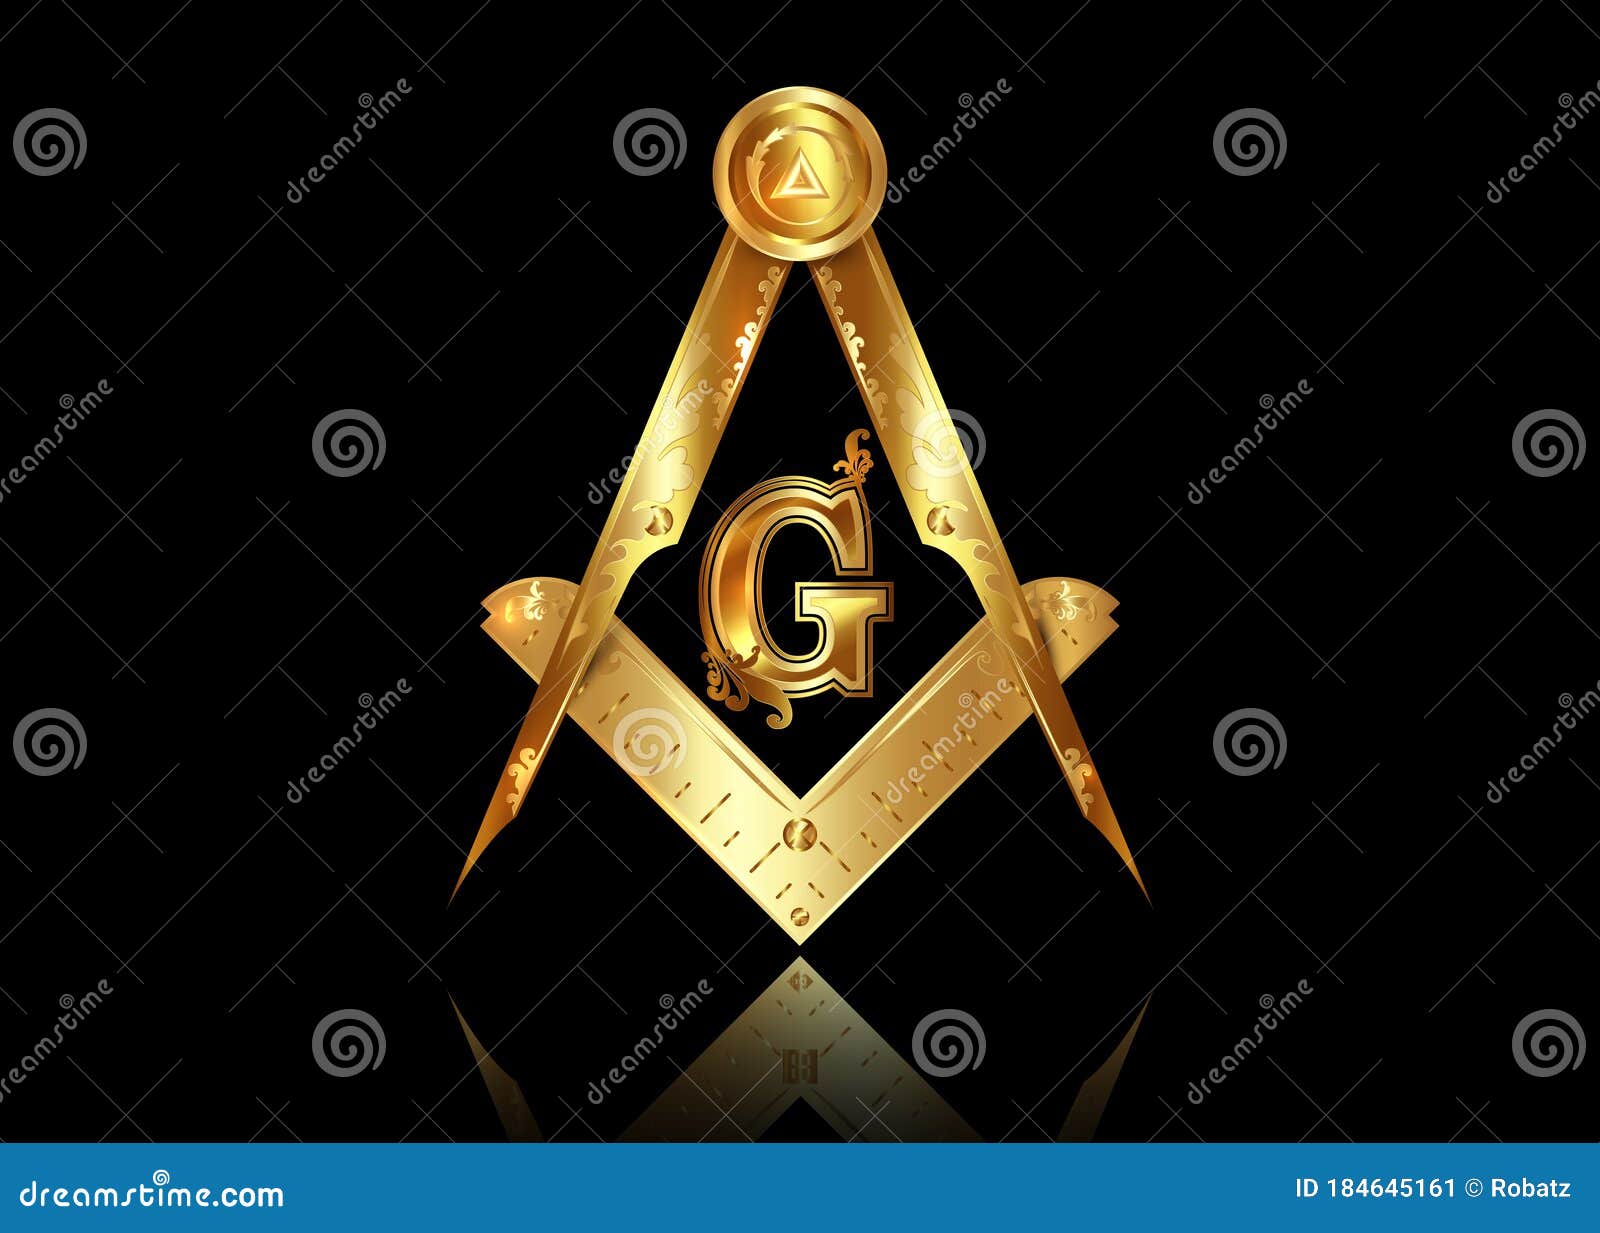 freemasonry emblem, gold masonic square and compass . all seeing eye of god in sacred geometry triangle, masonry icon